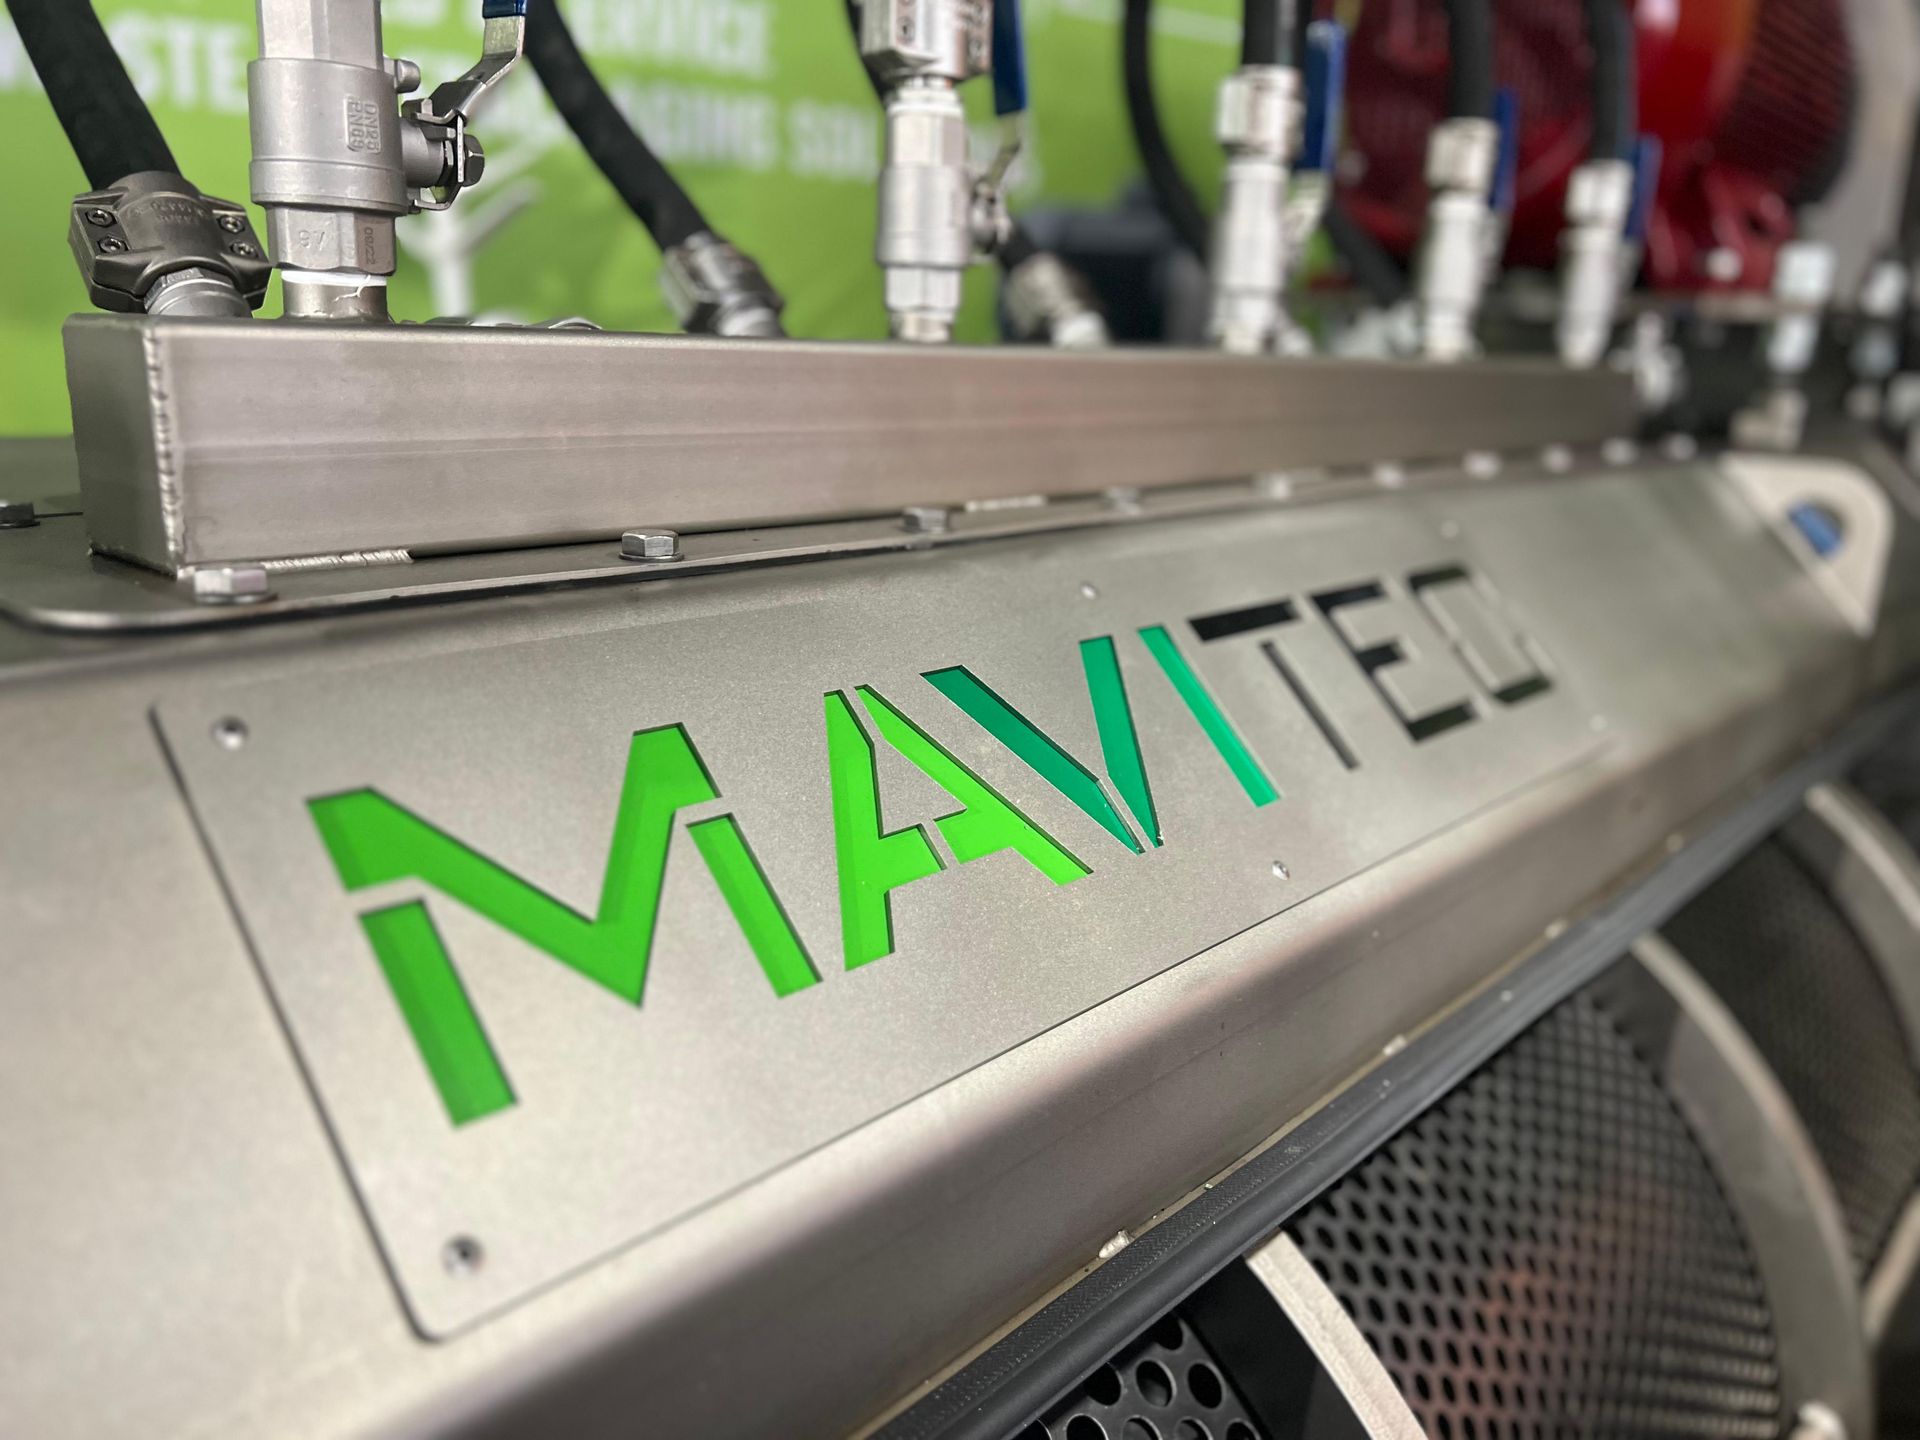 Mavitec Green Energy